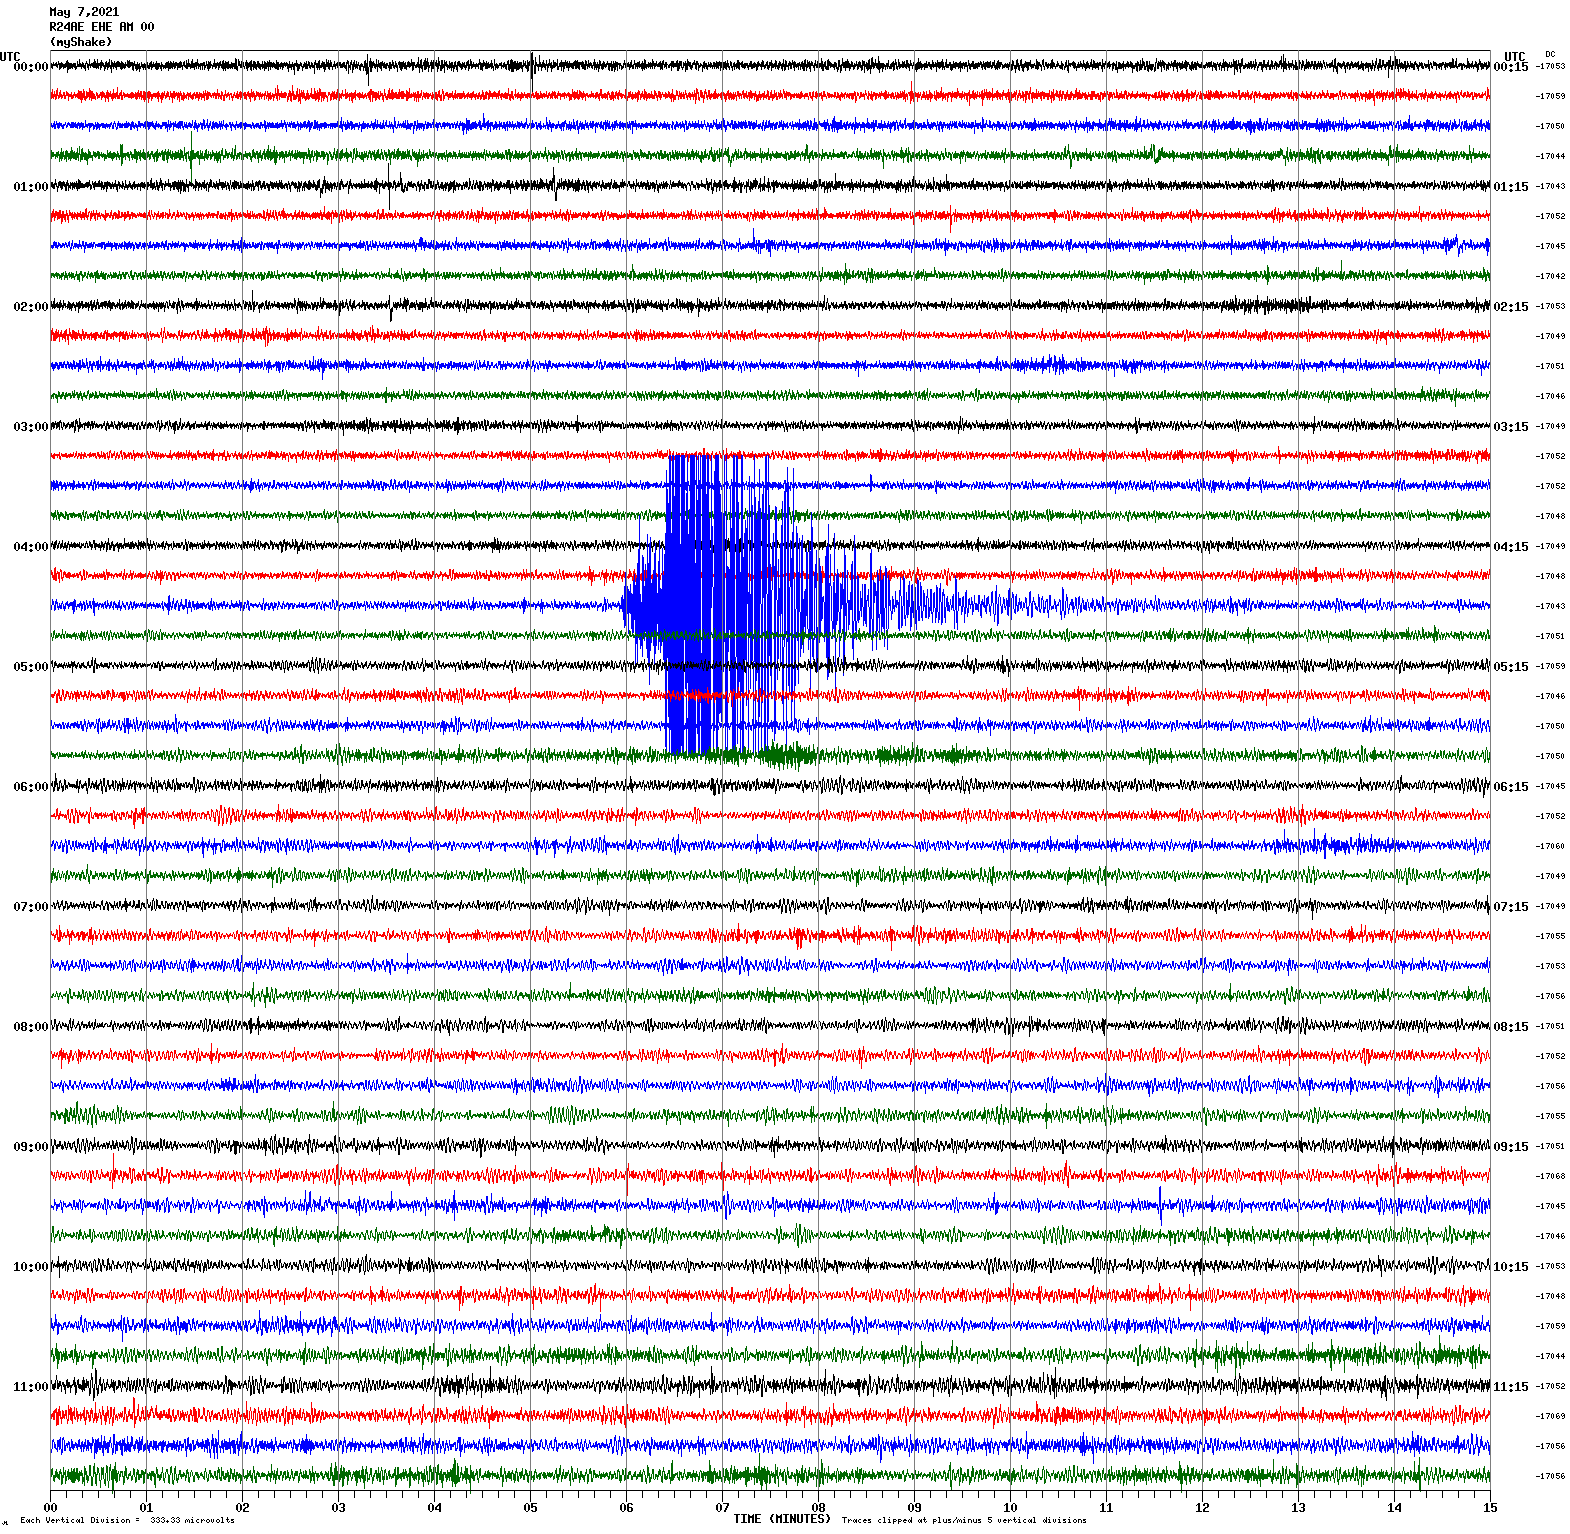 /seismic-data/R24AE/R24AE_EHE_AM_00.2021050700.gif